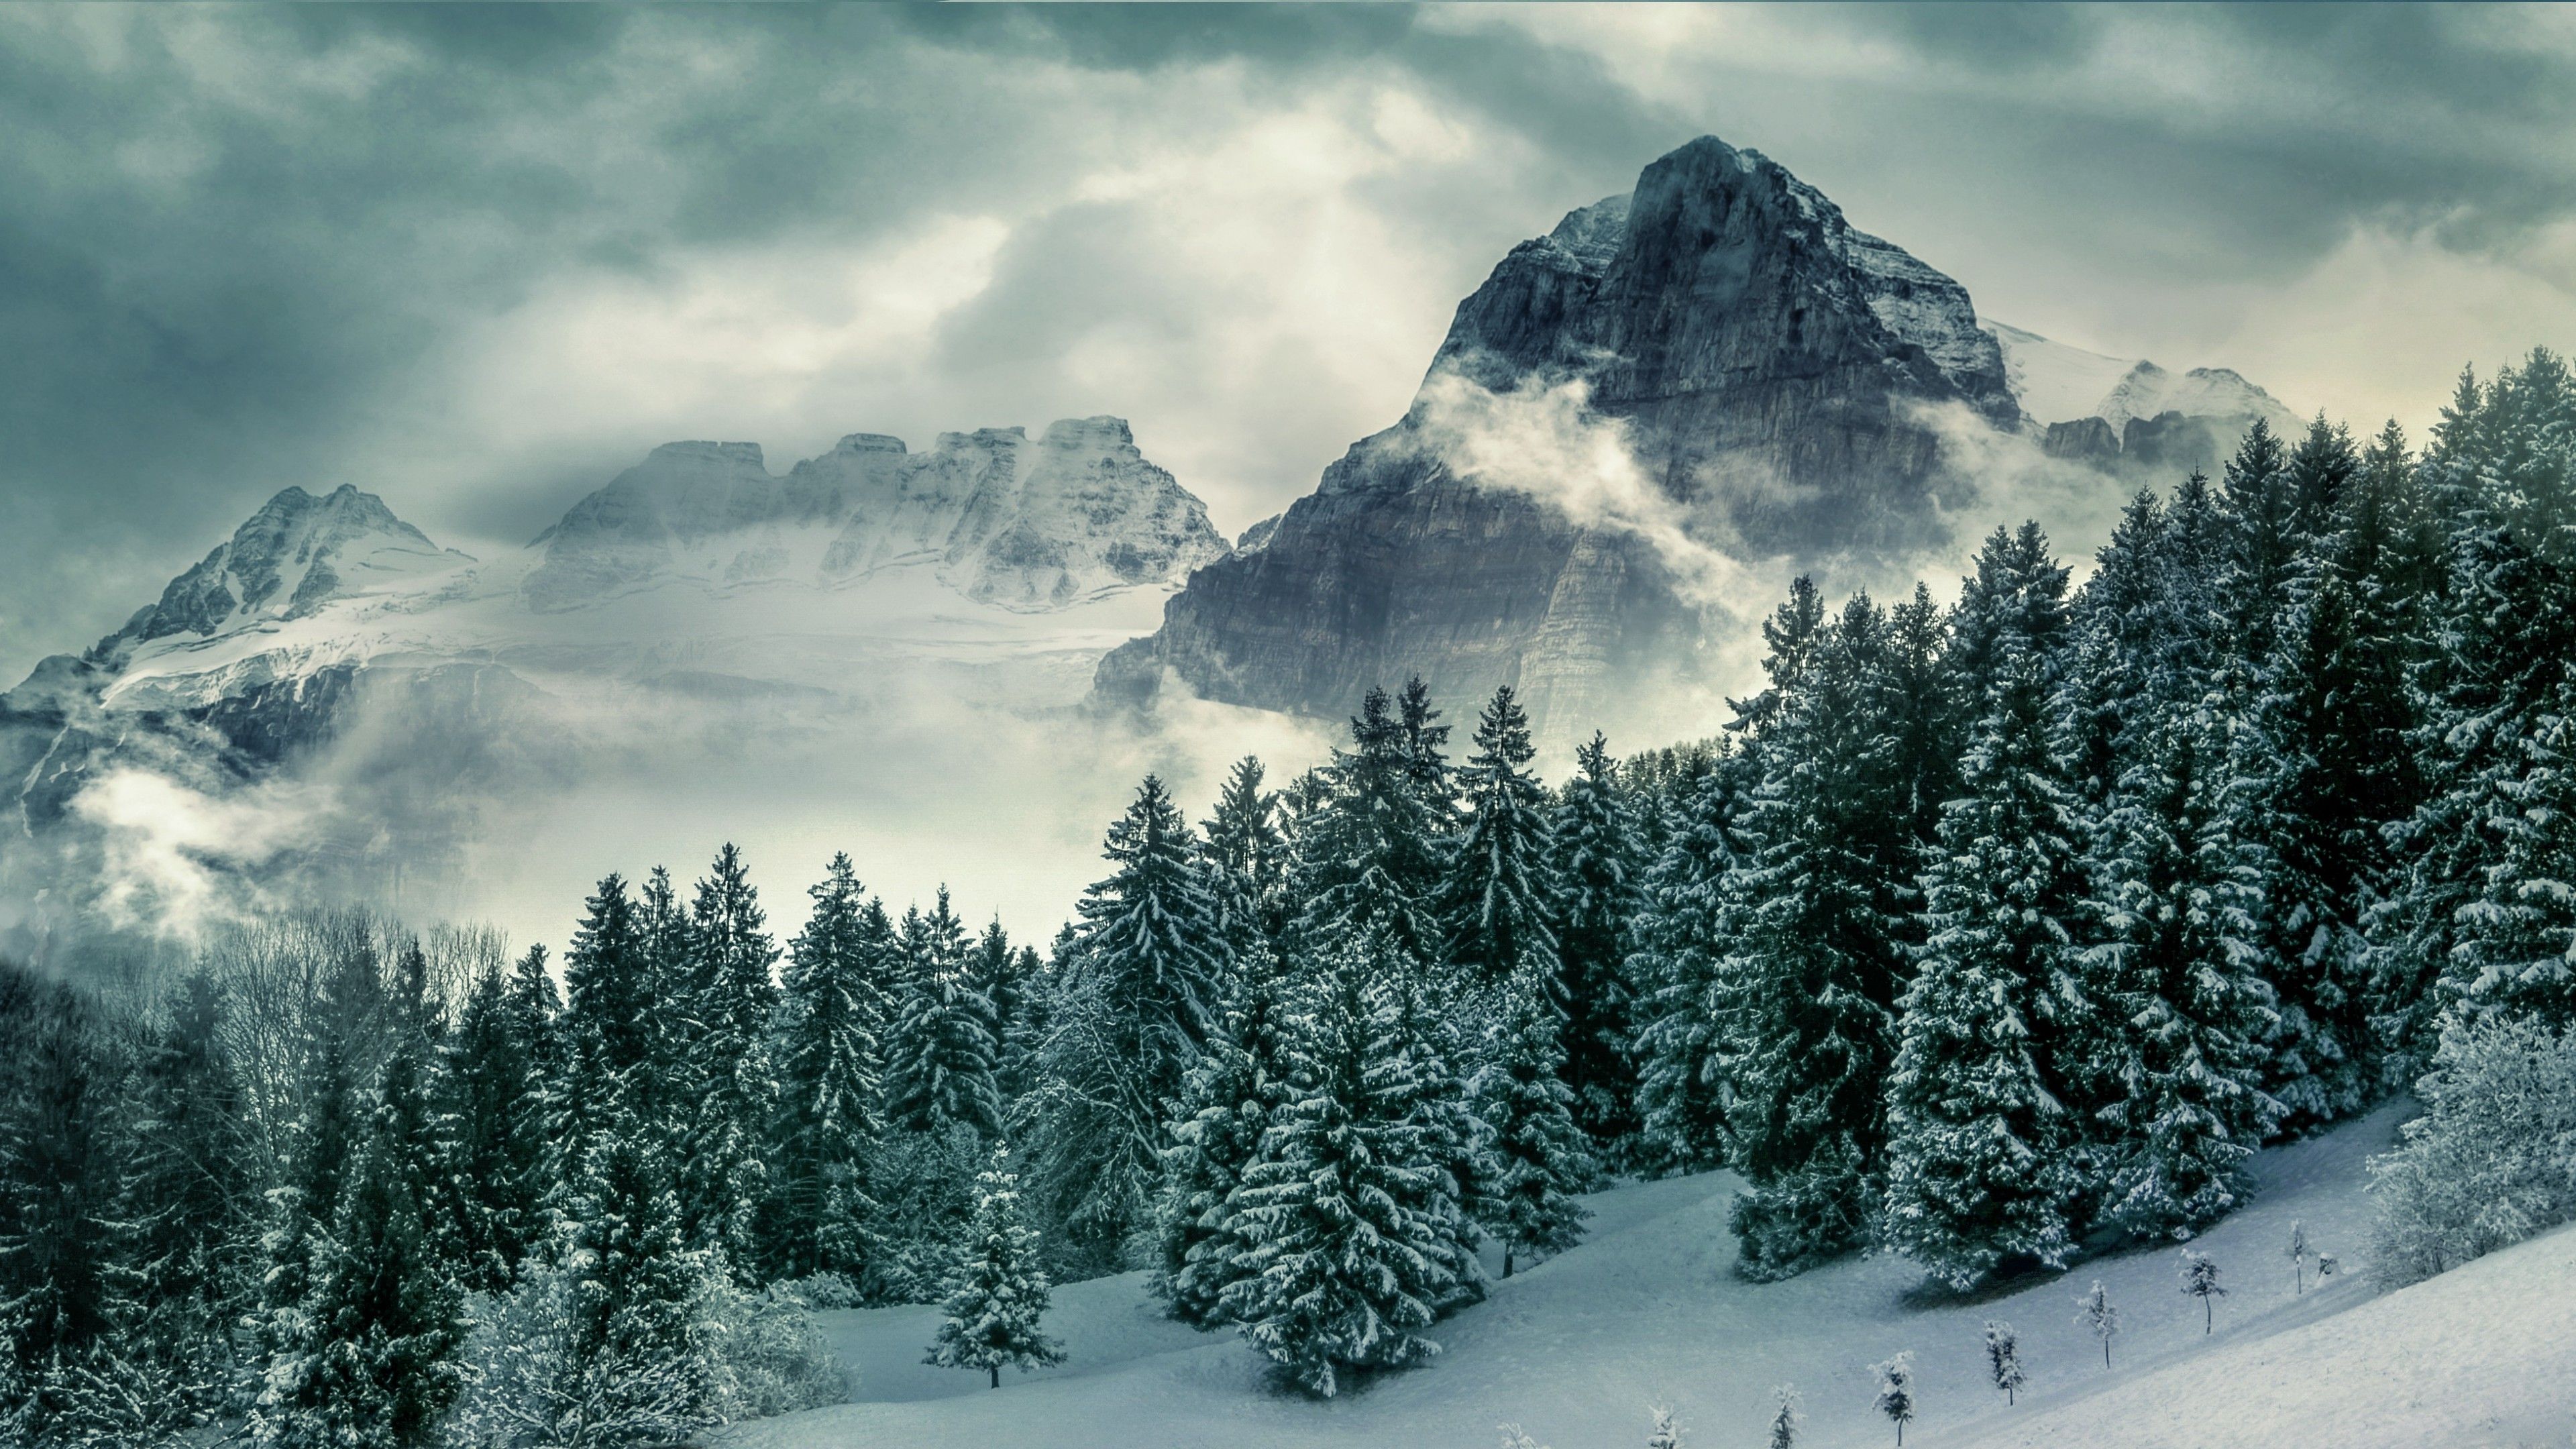 Forest 4K Wallpaper, Mountains, Pine trees, Winter, Peak, Nature